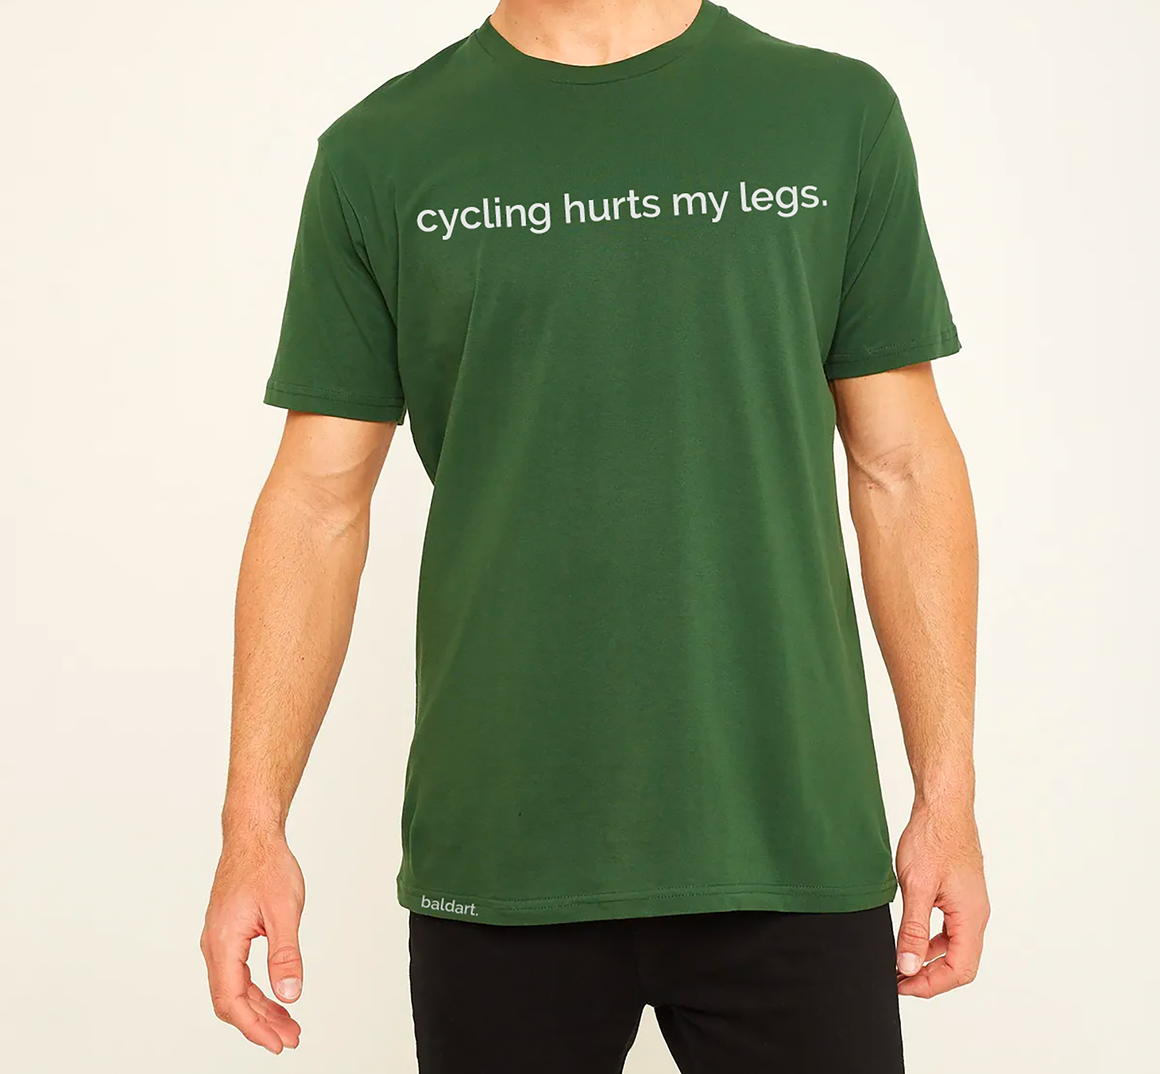 Green T Shirt featuring baldart. snippet story "cycling hurts my legs."